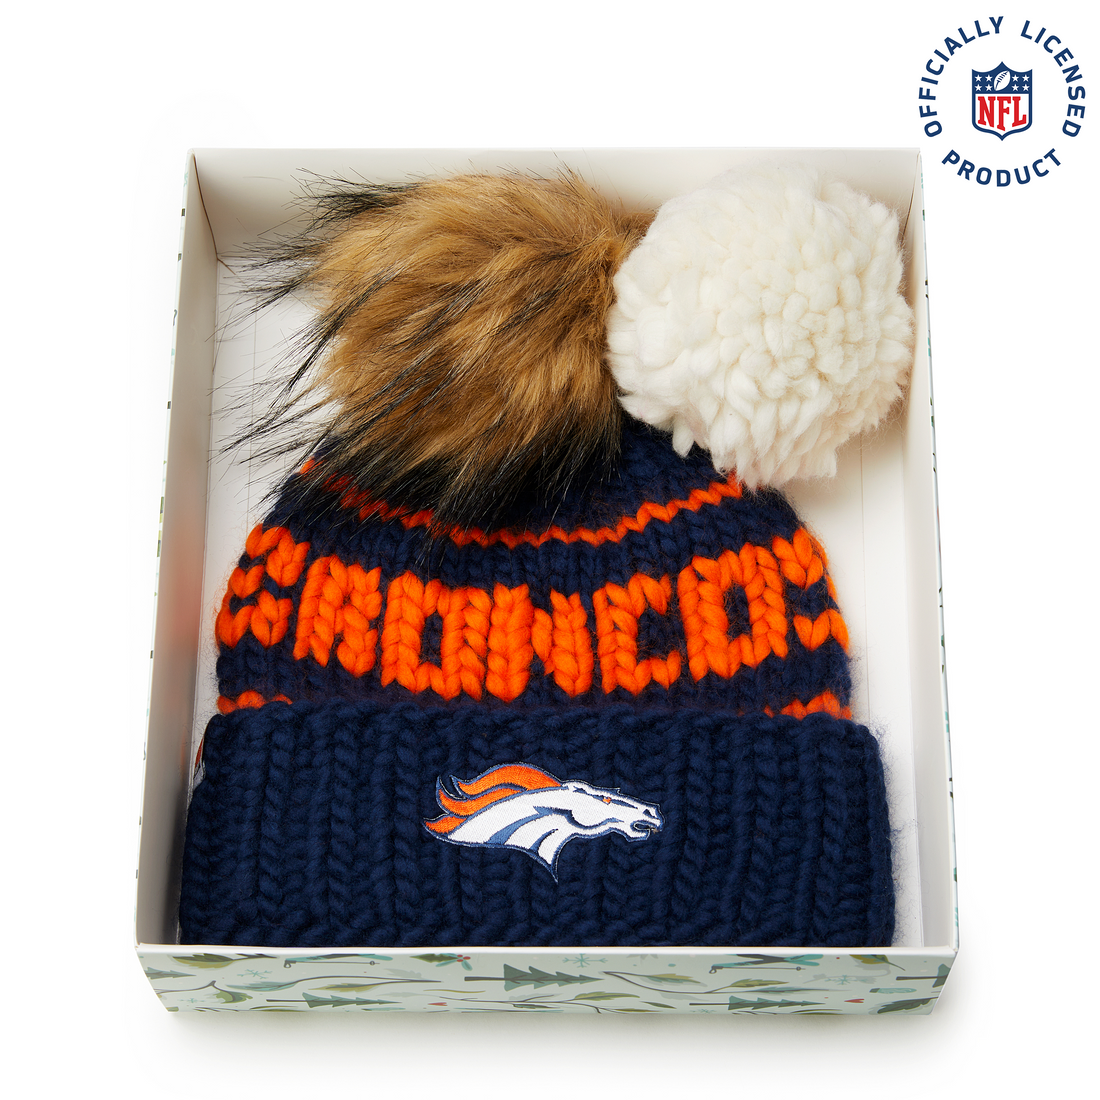 The Broncos NFL Beanie Gift Set